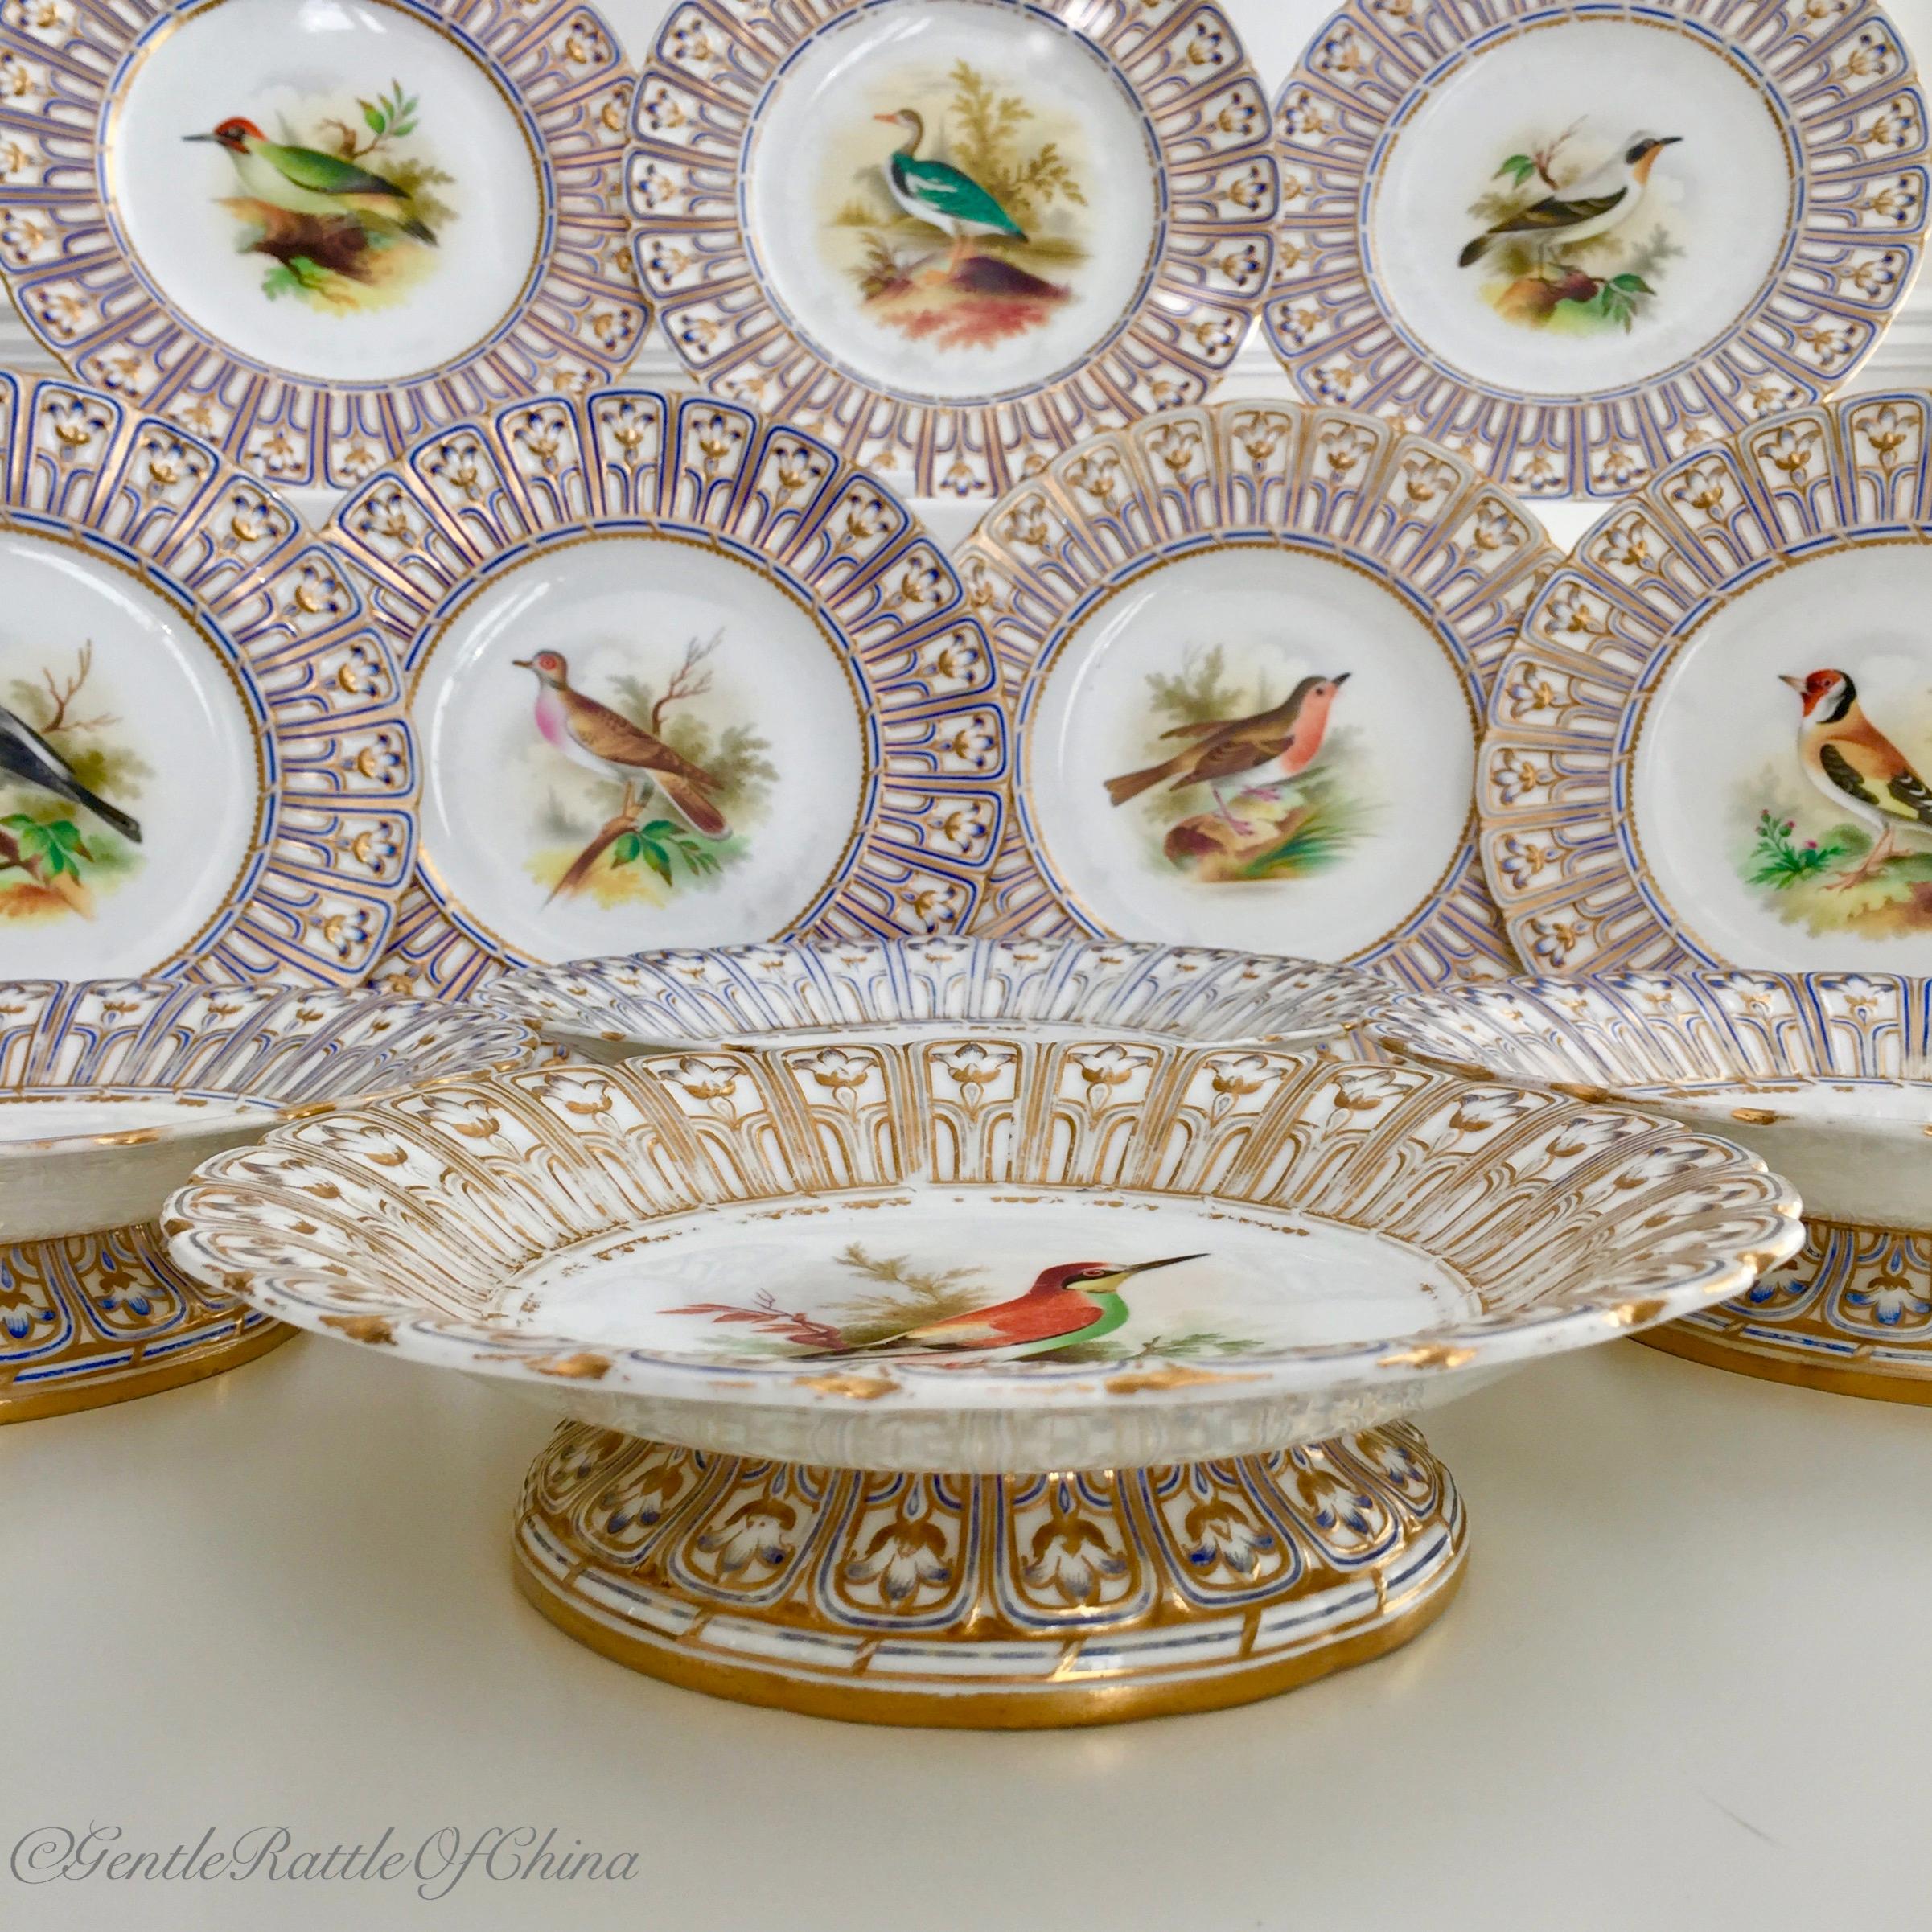 Mid-19th Century Minton Porcelain Dessert Service, Named Birds by Joseph Smith, Victorian 1851